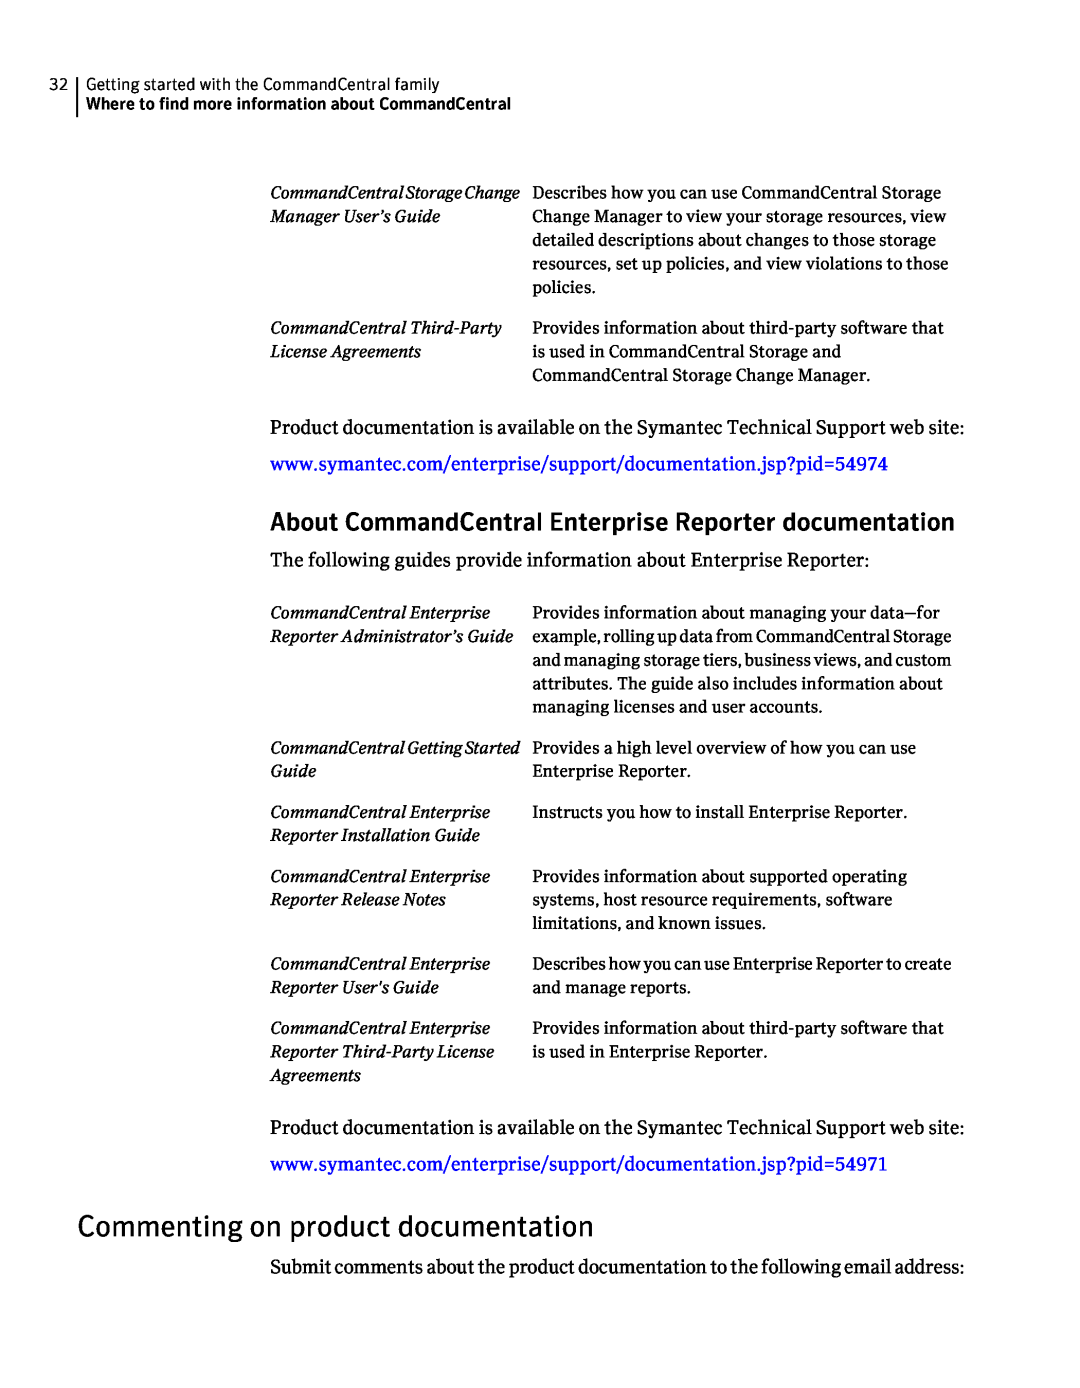 Symantec 5.1 manual Commenting on product documentation, About CommandCentral Enterprise Reporter documentation 